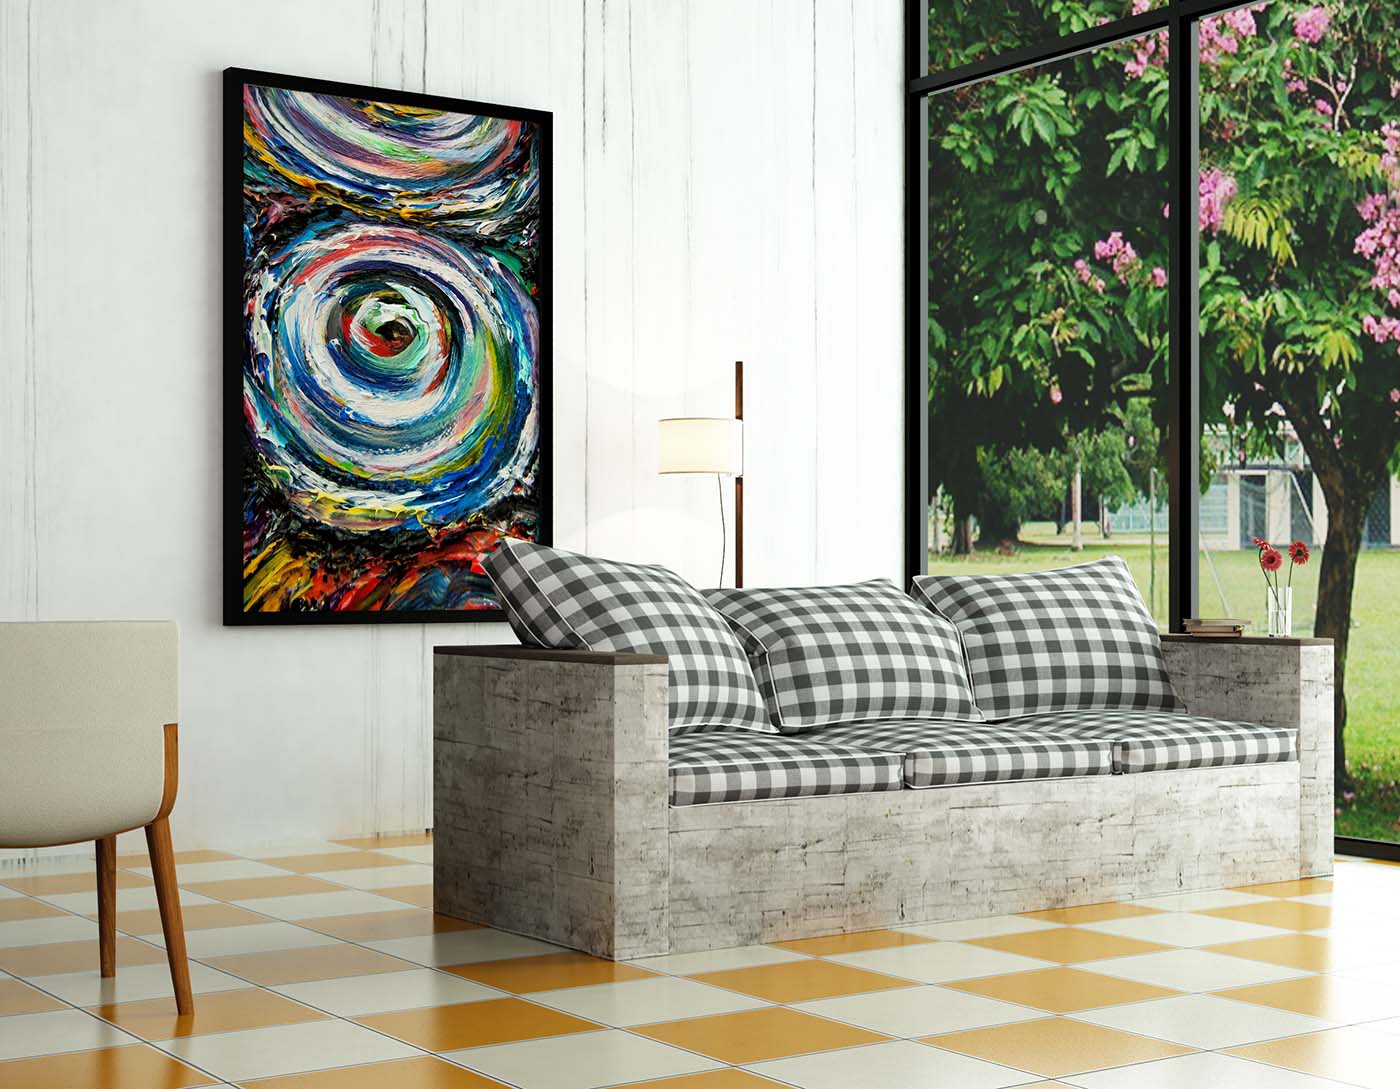 Vid-19 Ocular abstract art on a living room wall by Doug LaRue